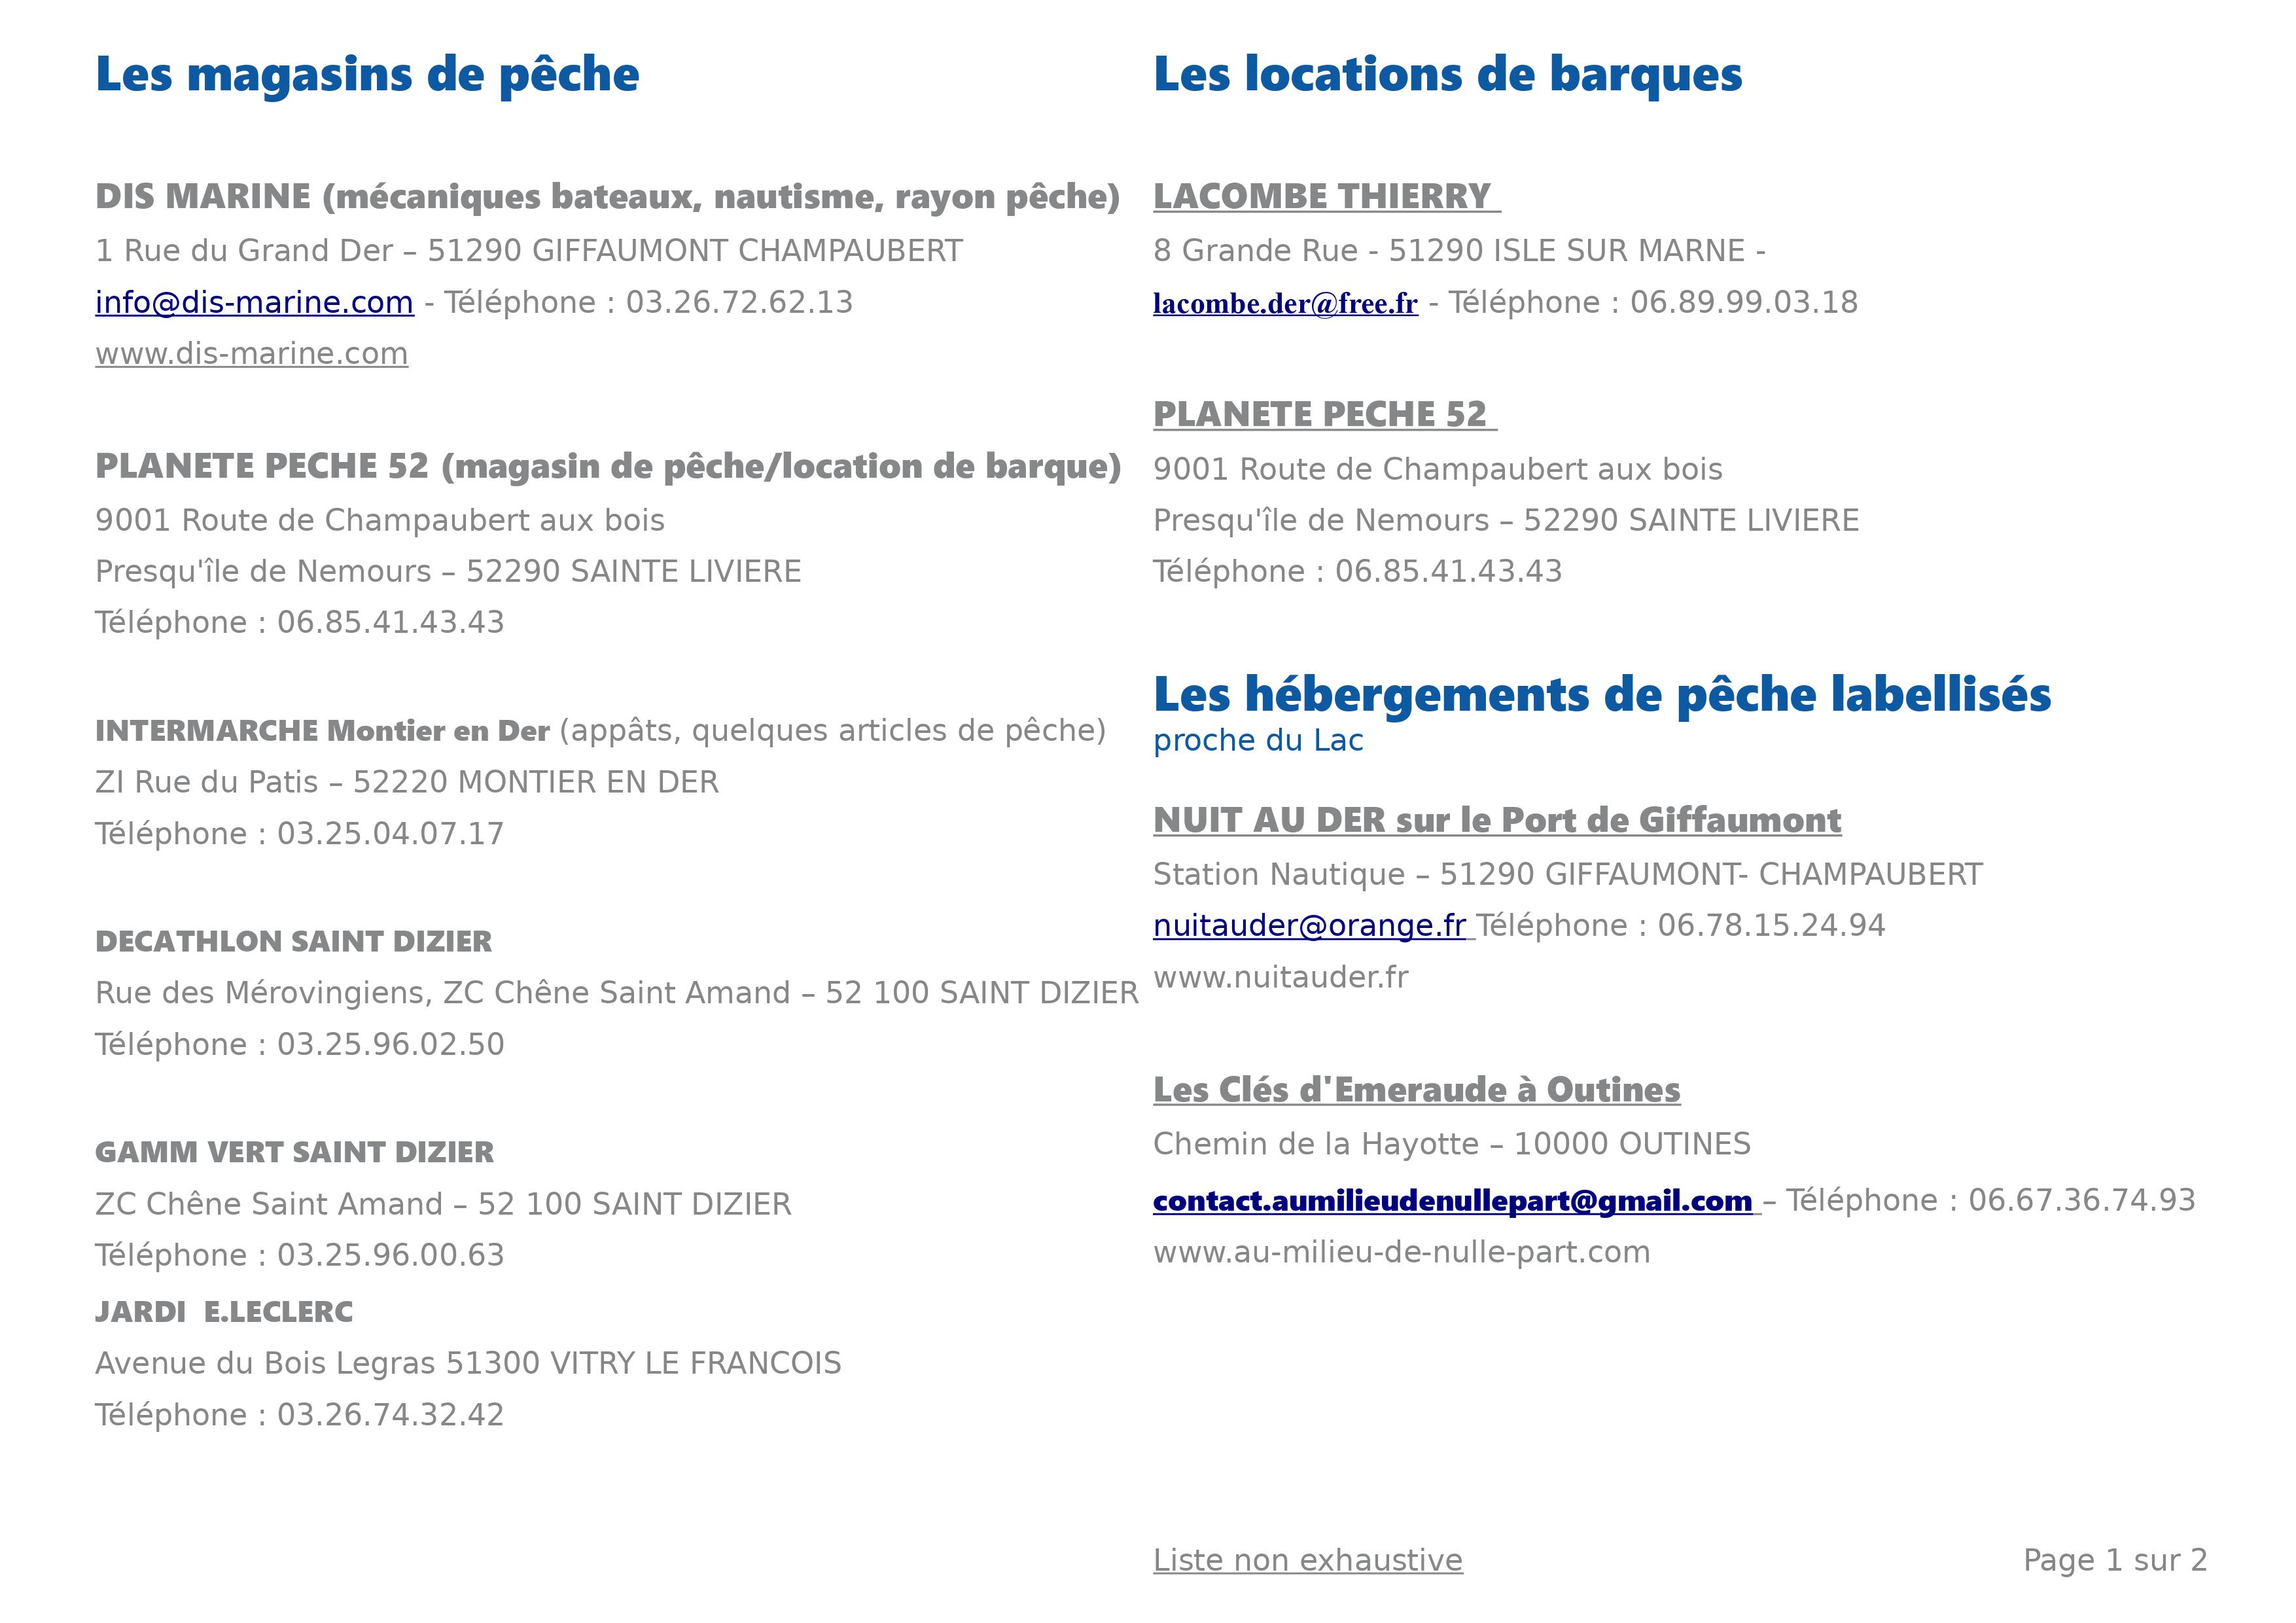 listing pêche mag, loc barques, hébergements labellisés (1)